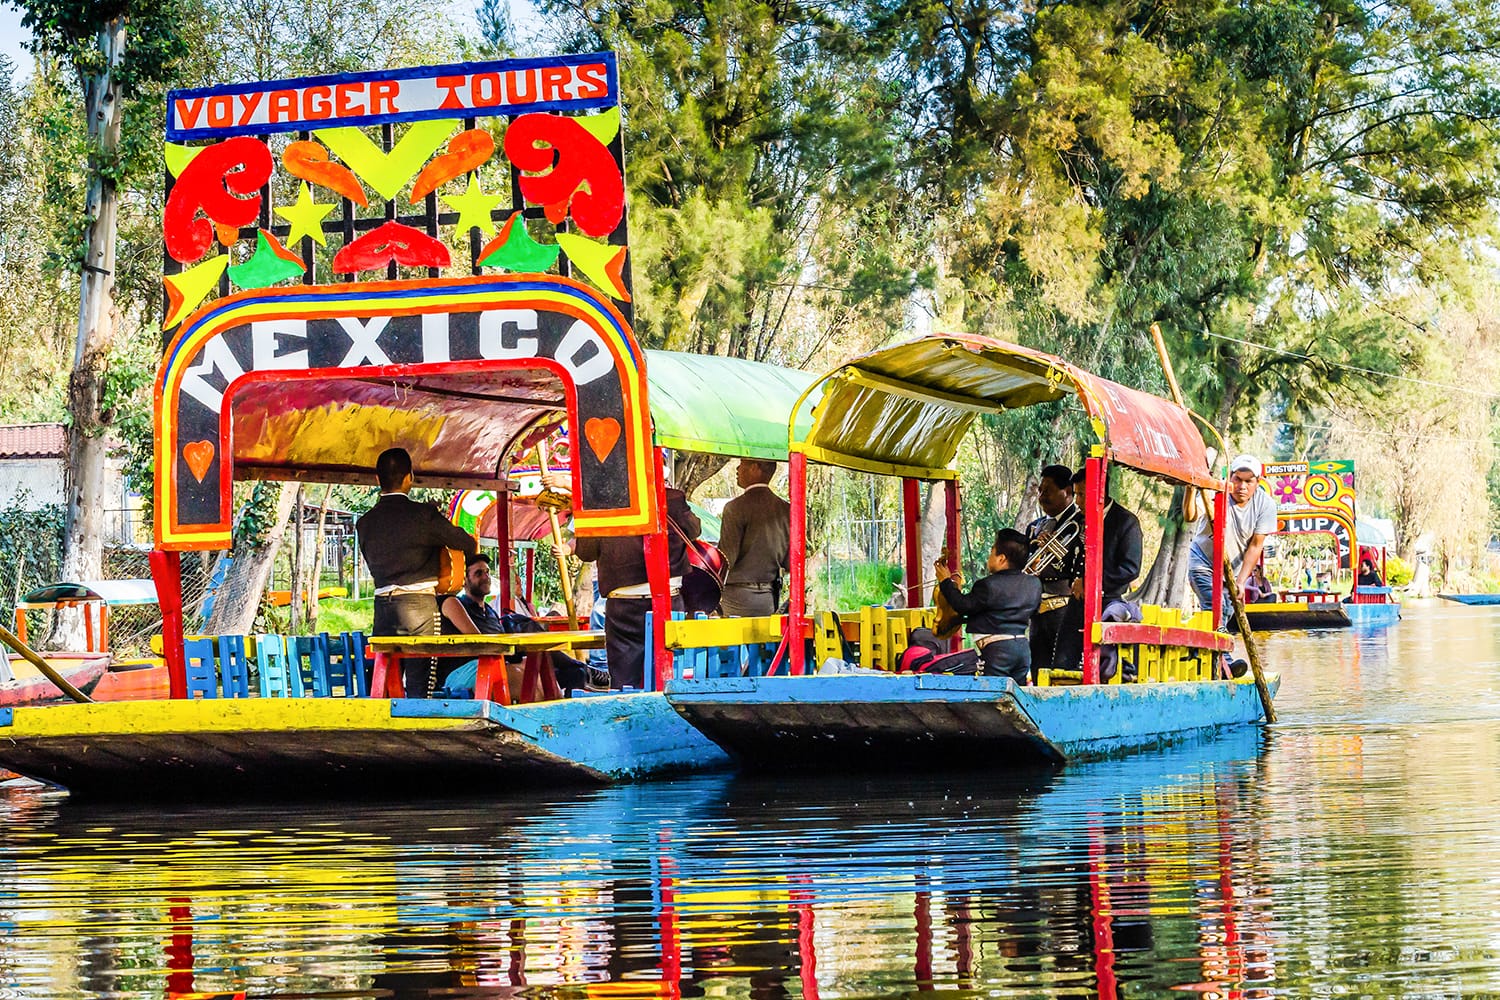 Traditional boats "trajineras" in Xochimilco Mexico City